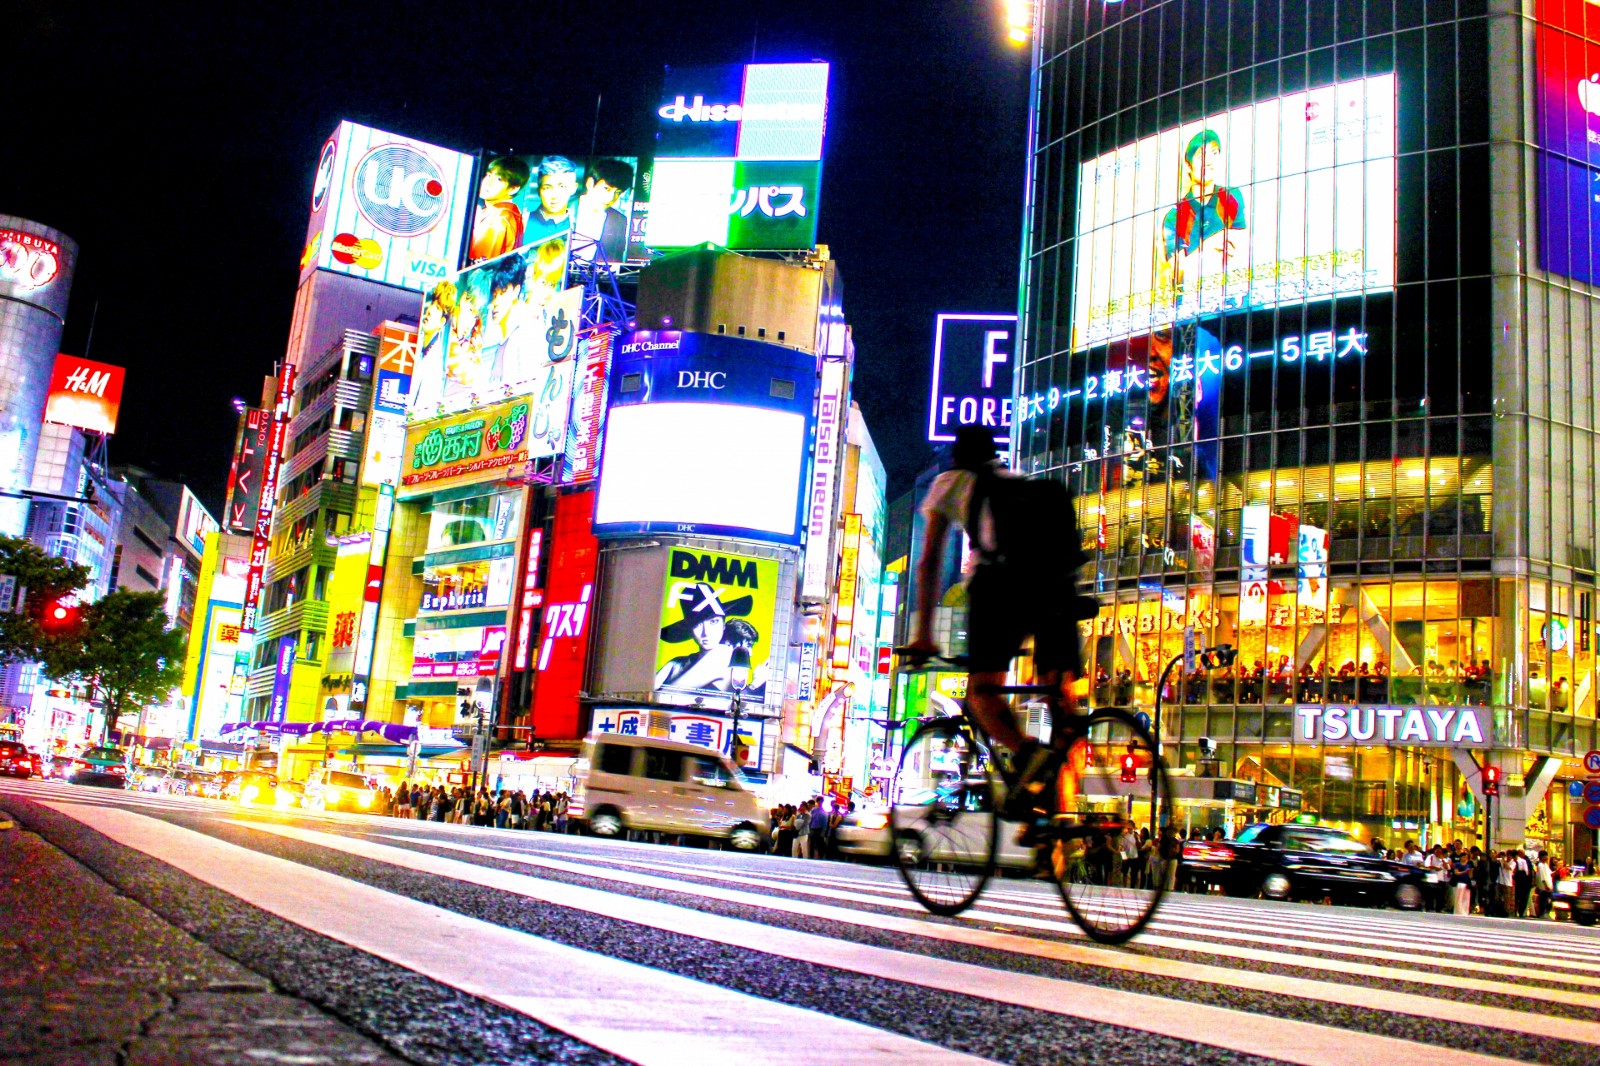 The street of Shibuya at night